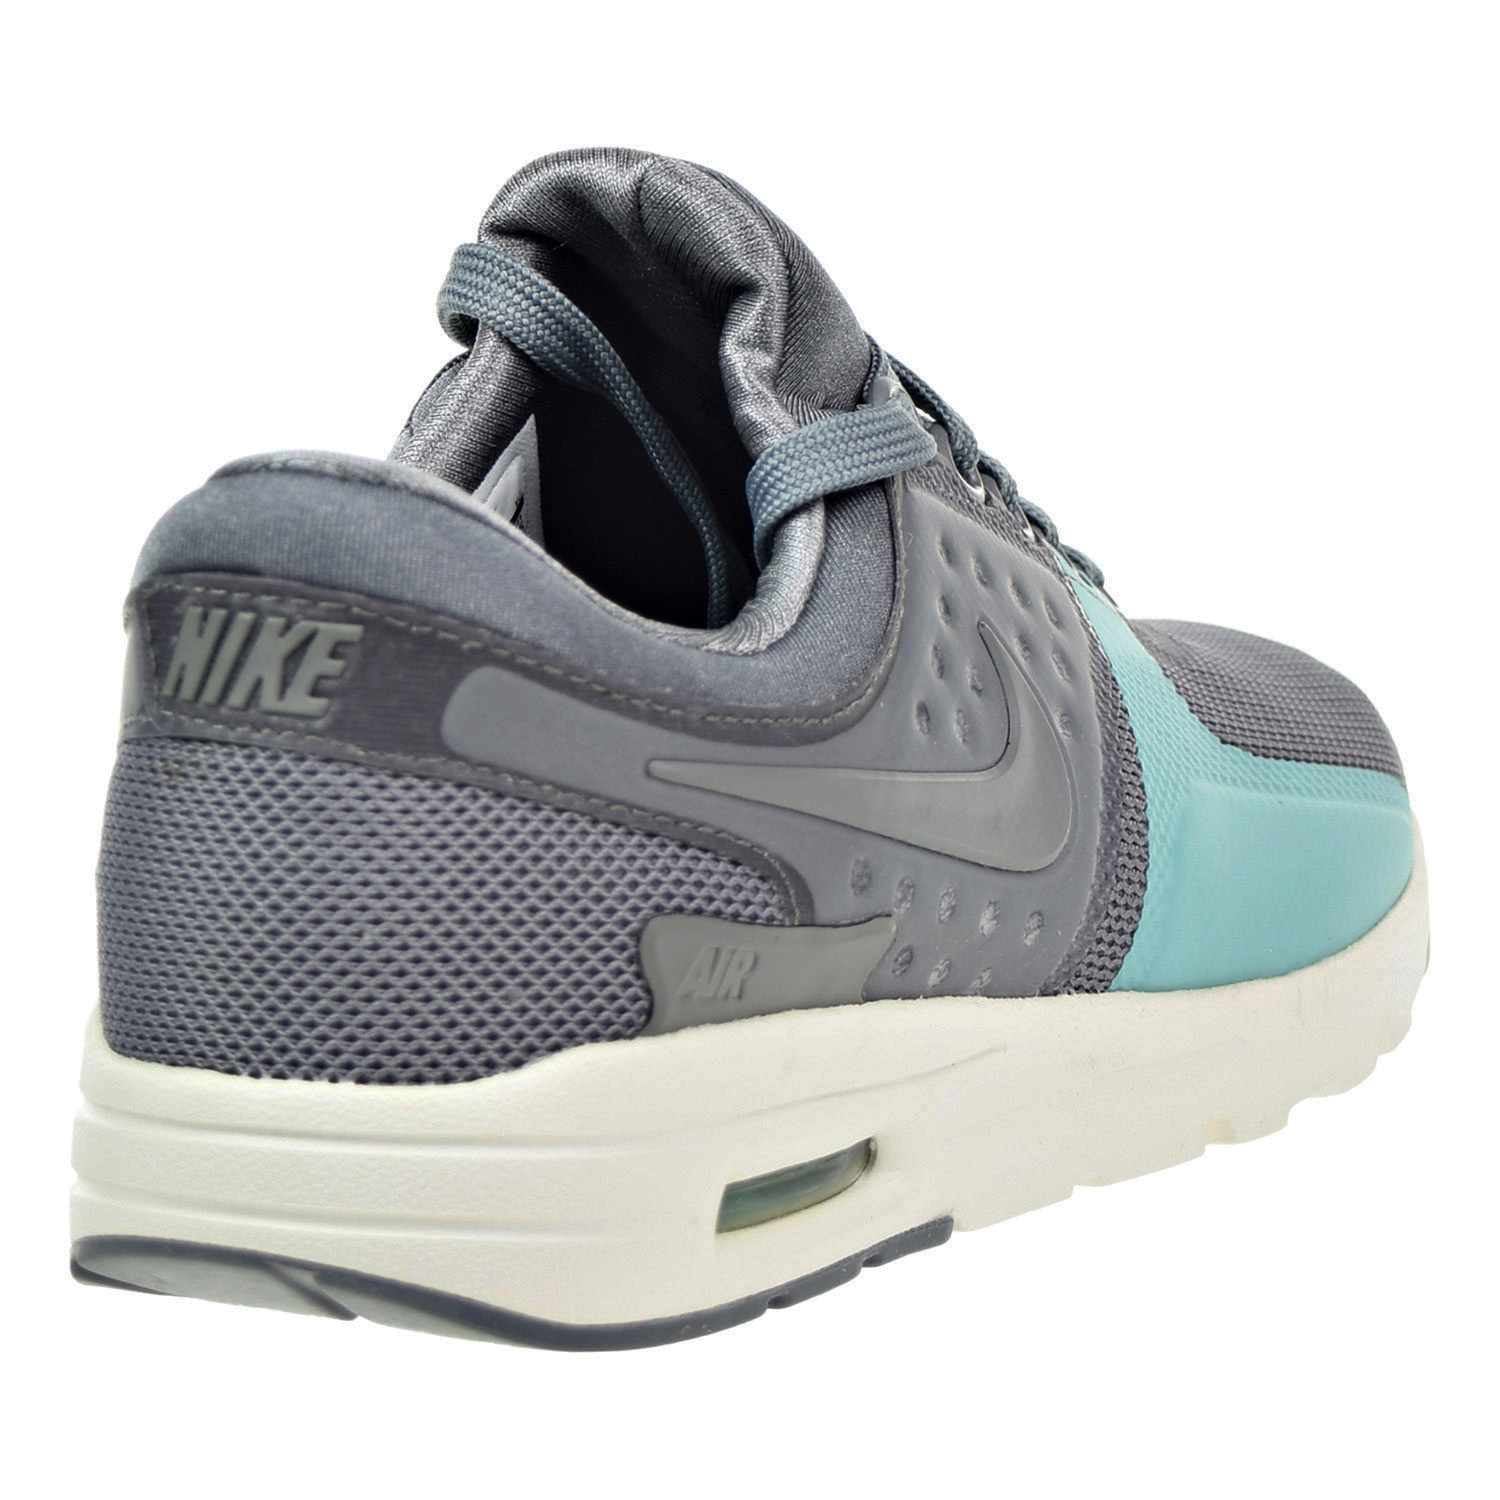 Nike Air Max Zero Women's Running Shoe Cool Grey/Sail/Washed Teal 857661-001 - image 3 of 6